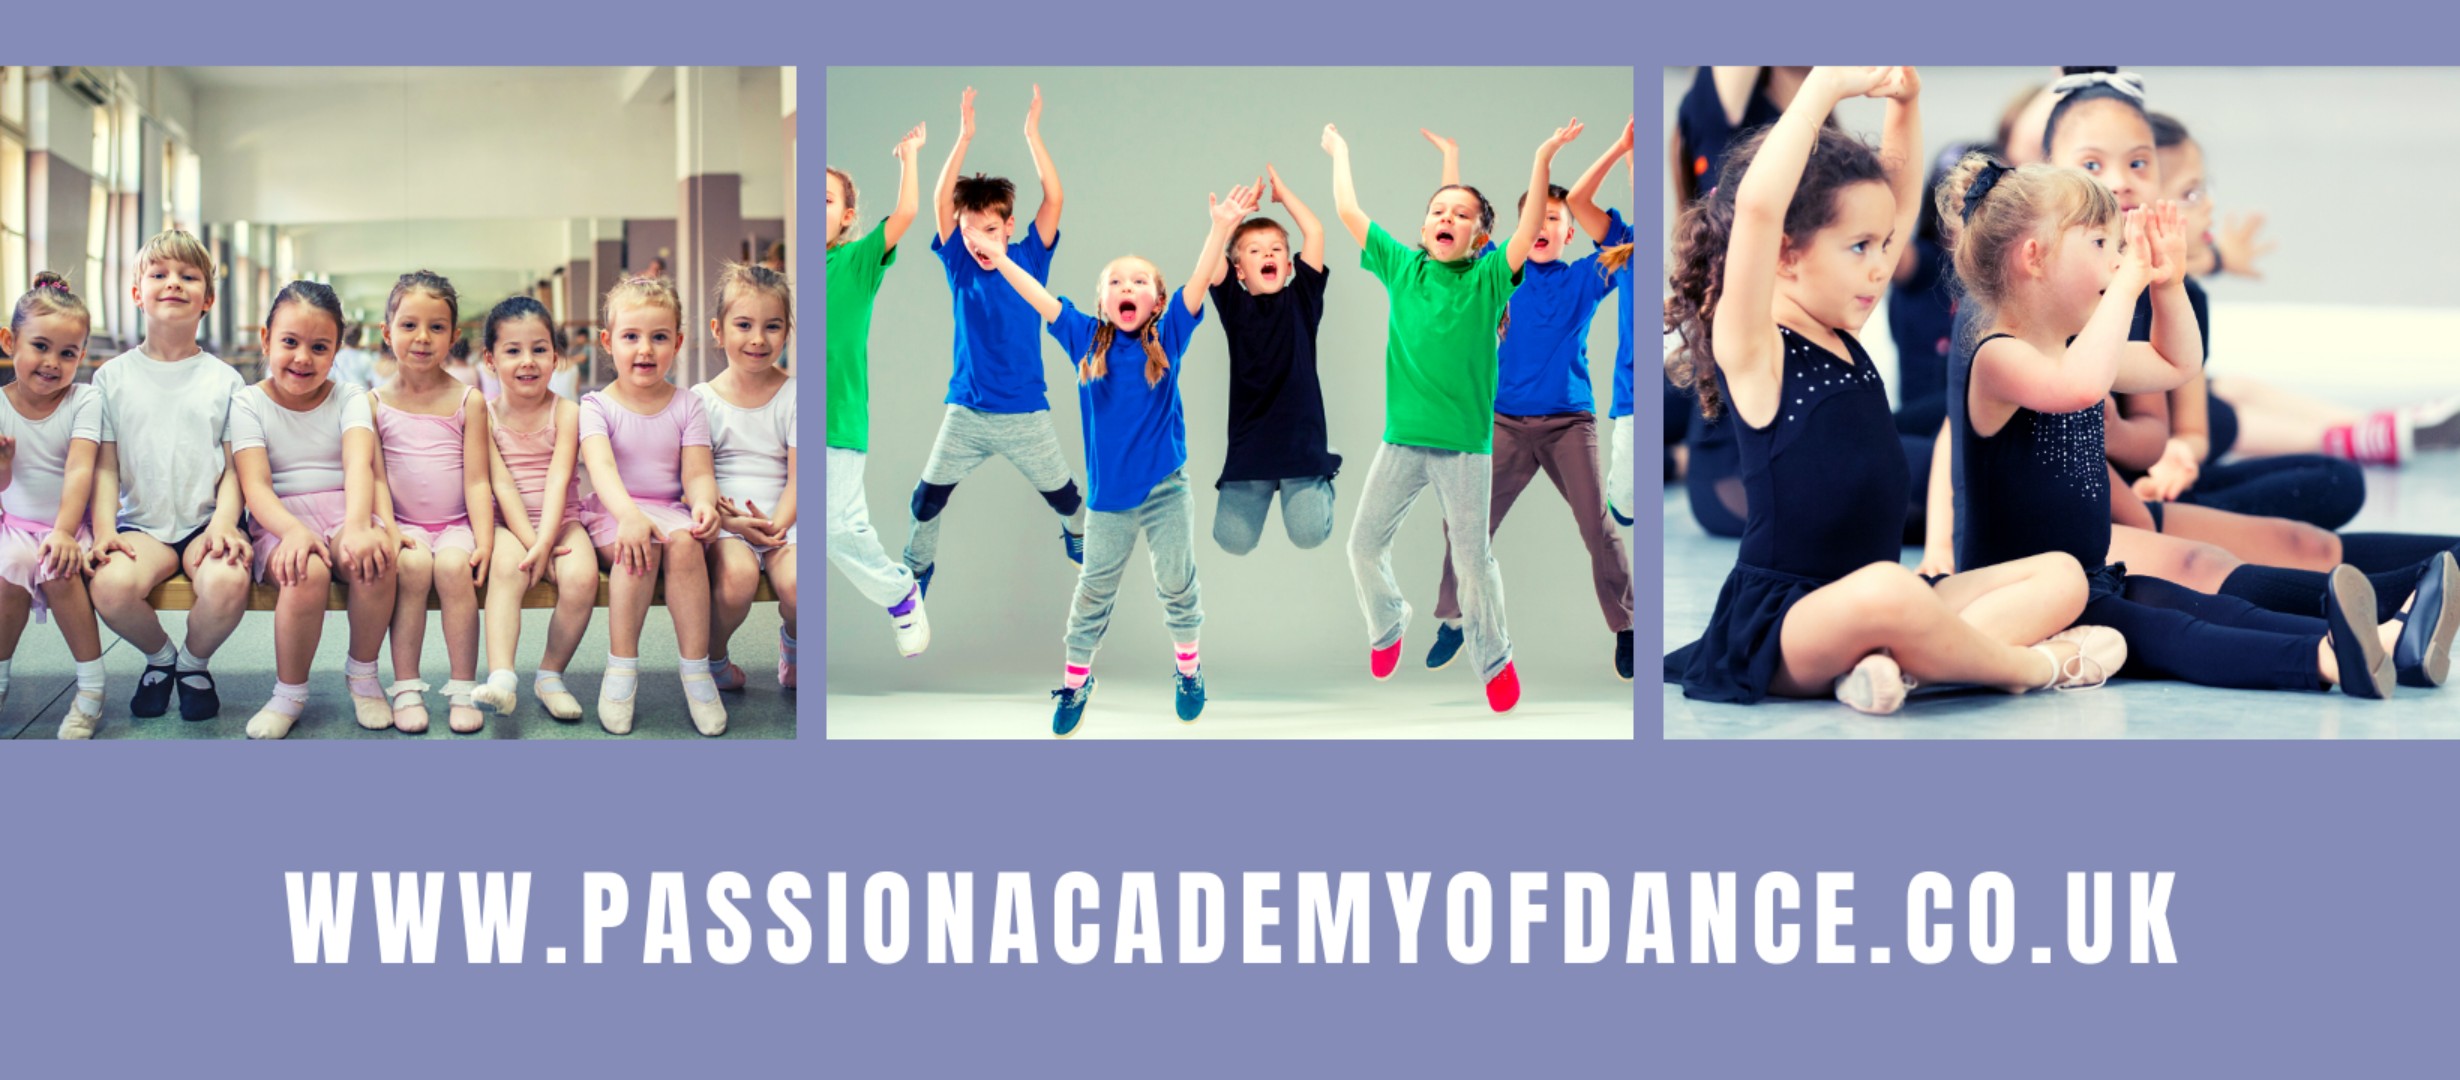 three pictures of children dancing, text underneath with dance school website www.passionacademyofdance.co.uk